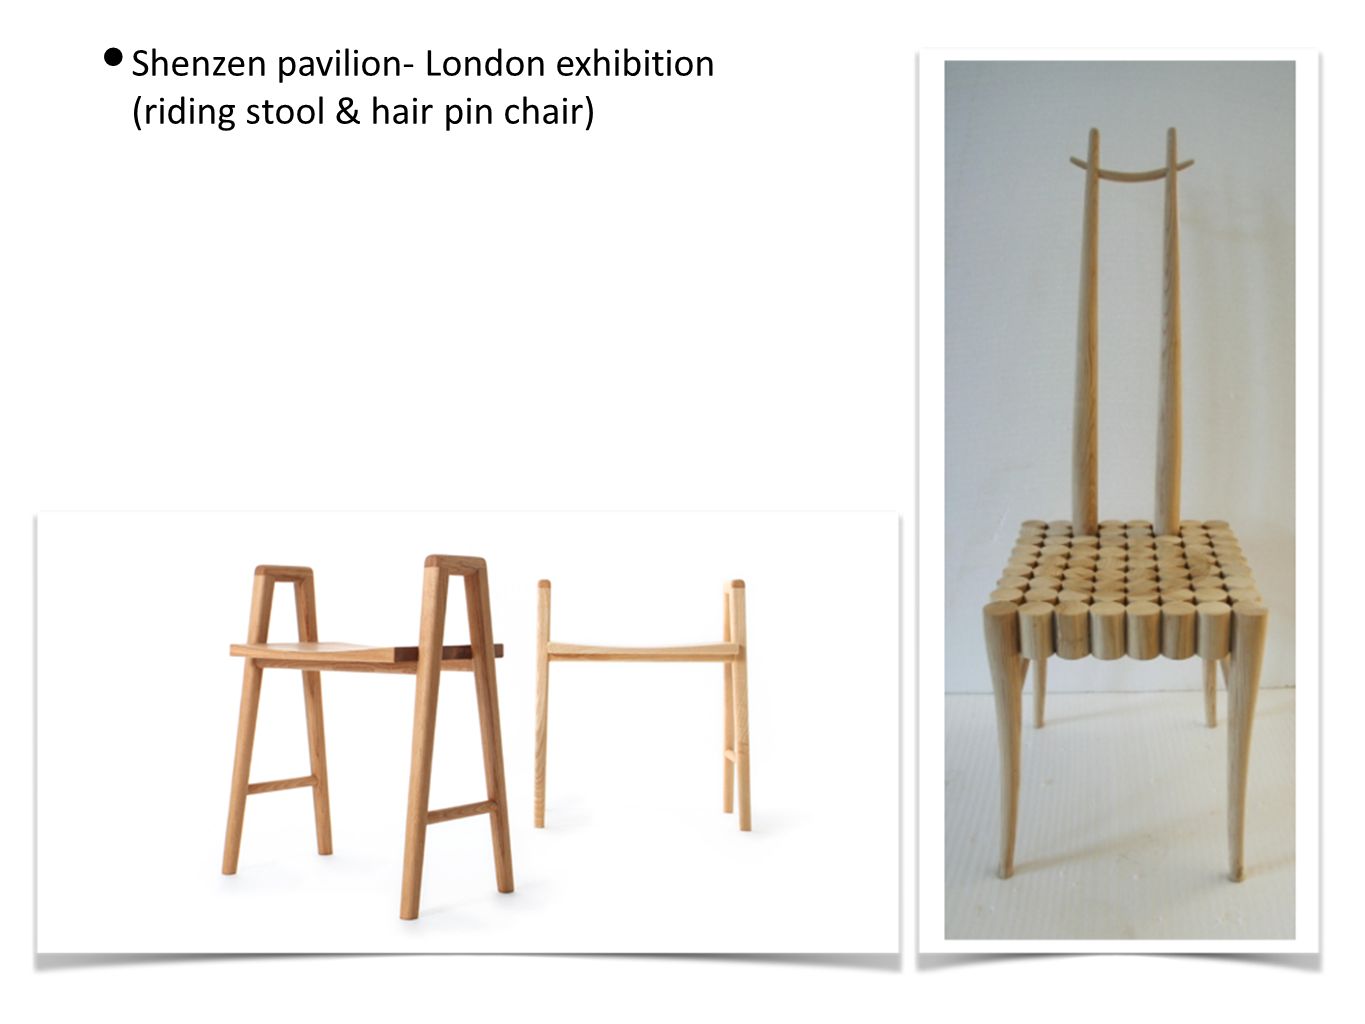 Shenzen pavilion- London exhibition (riding stool & hair pin chair)